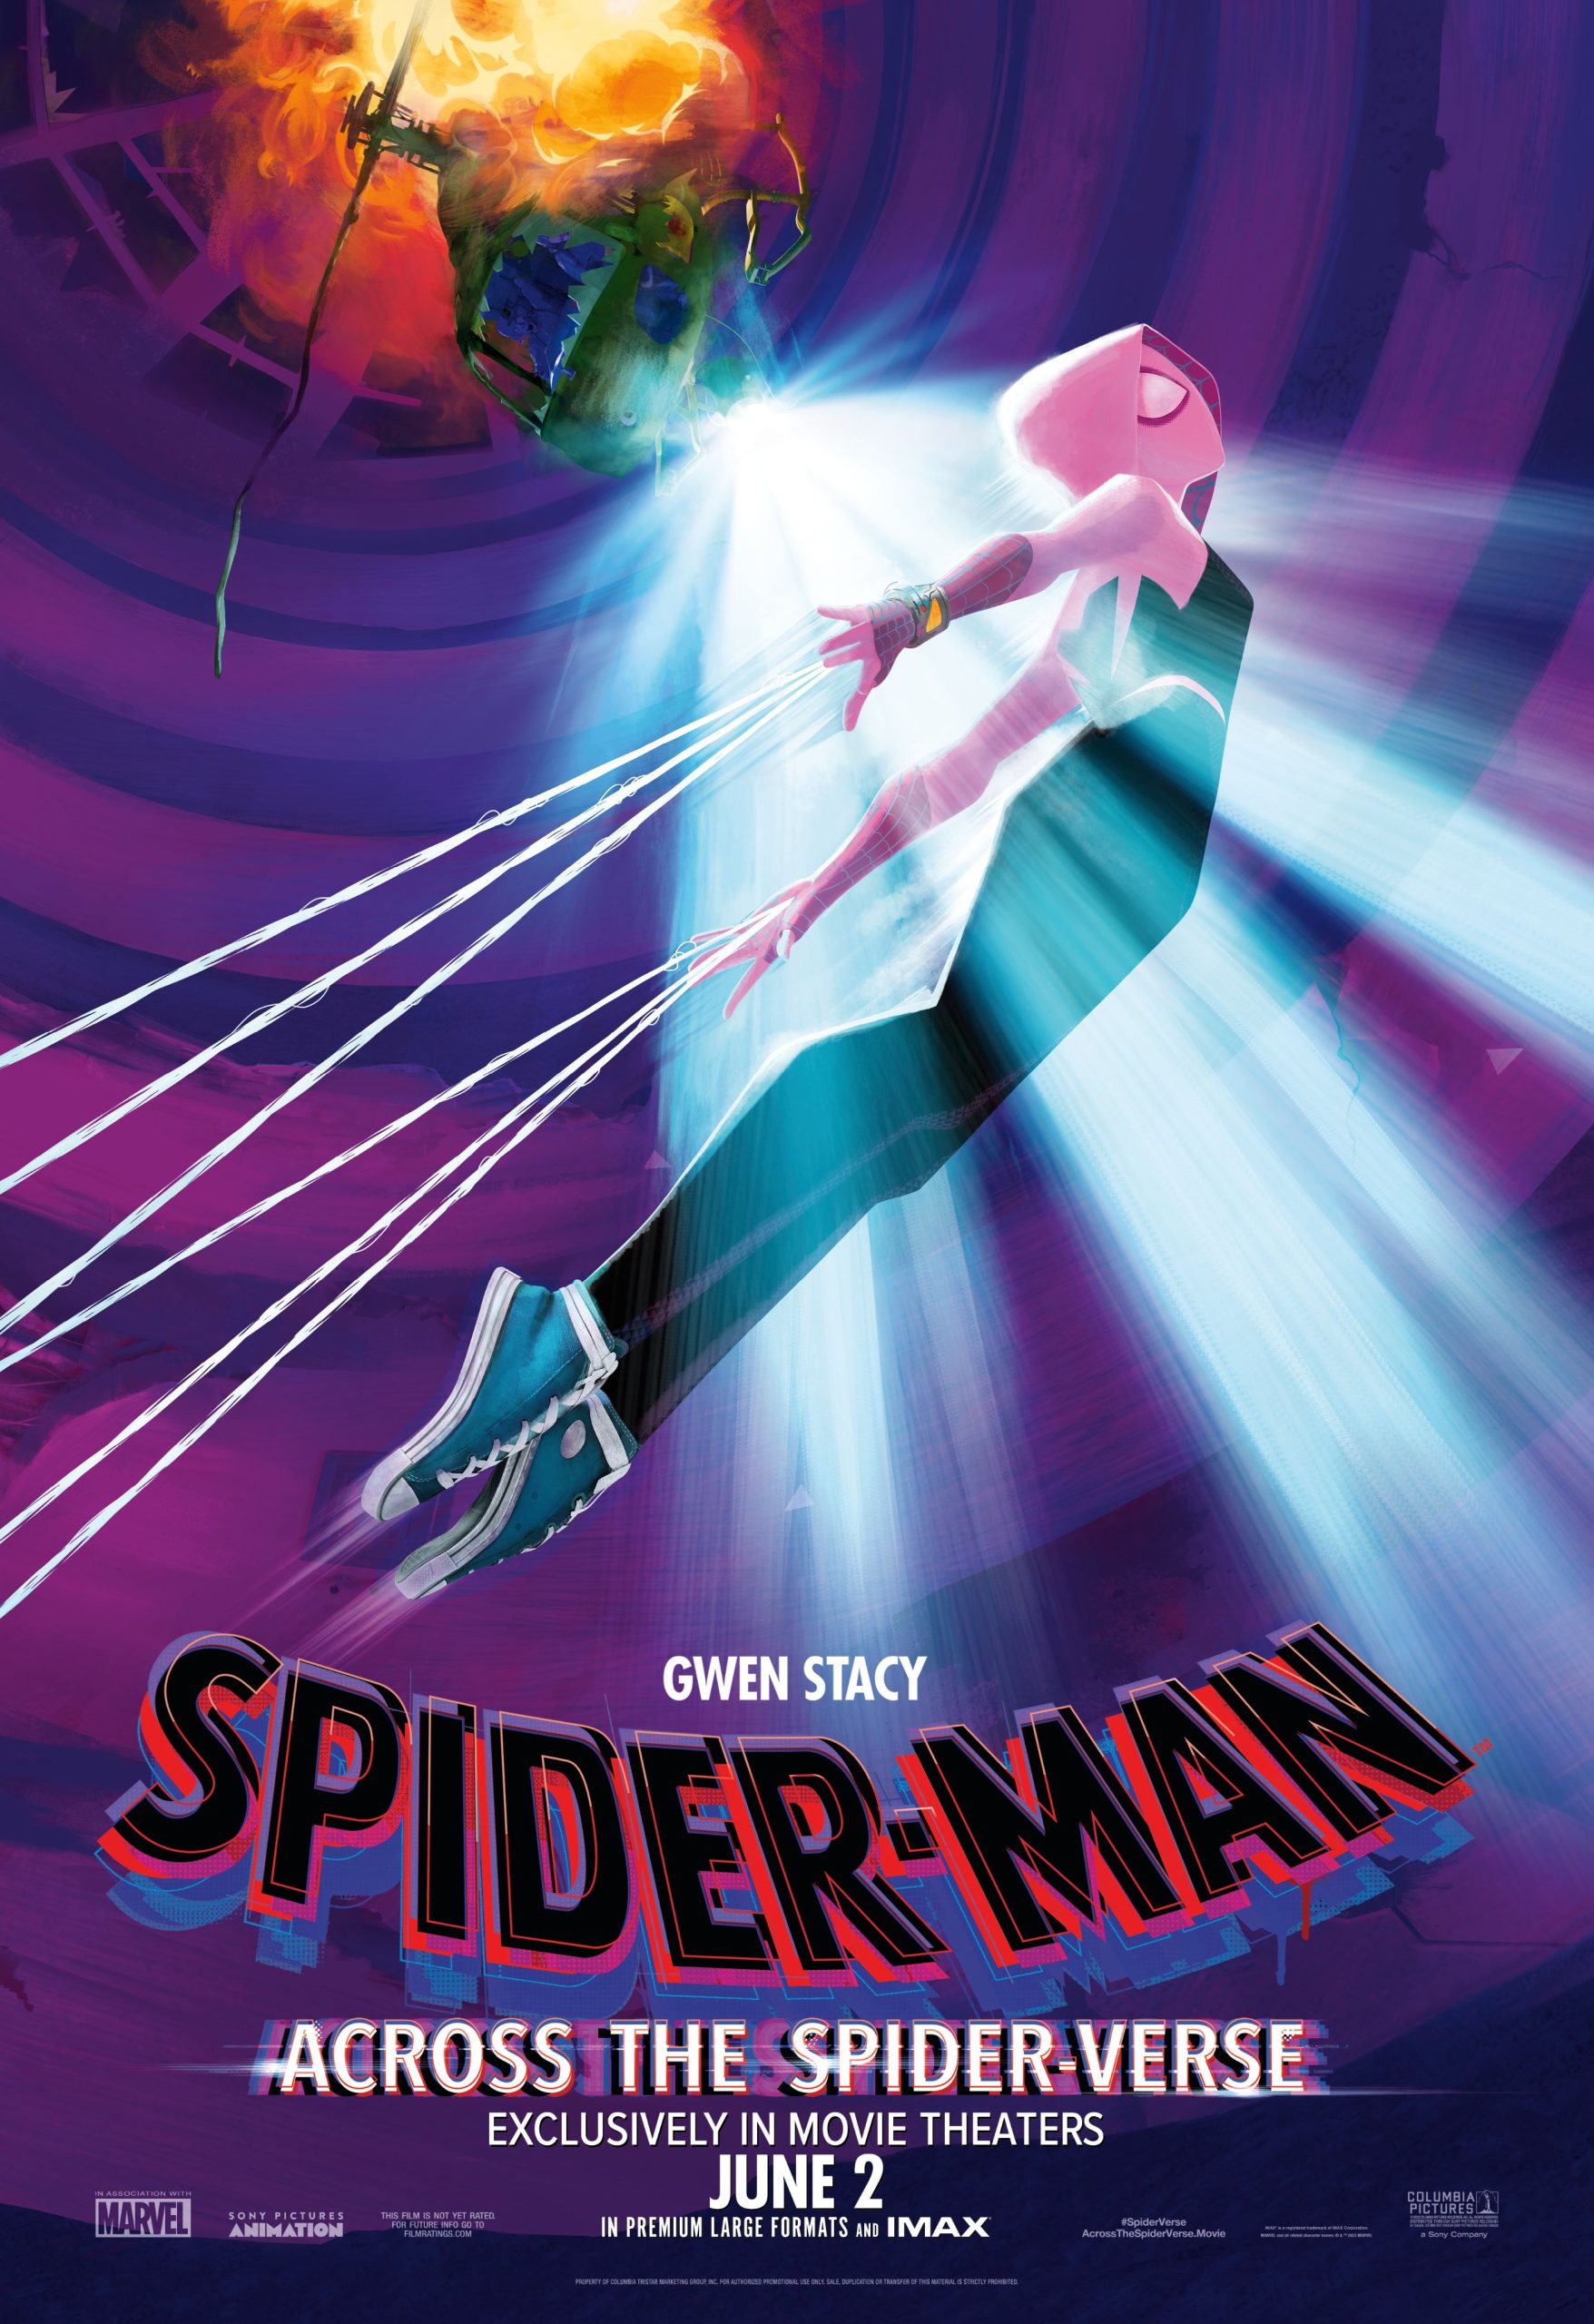 Gwen Stacy - Spider-Woman